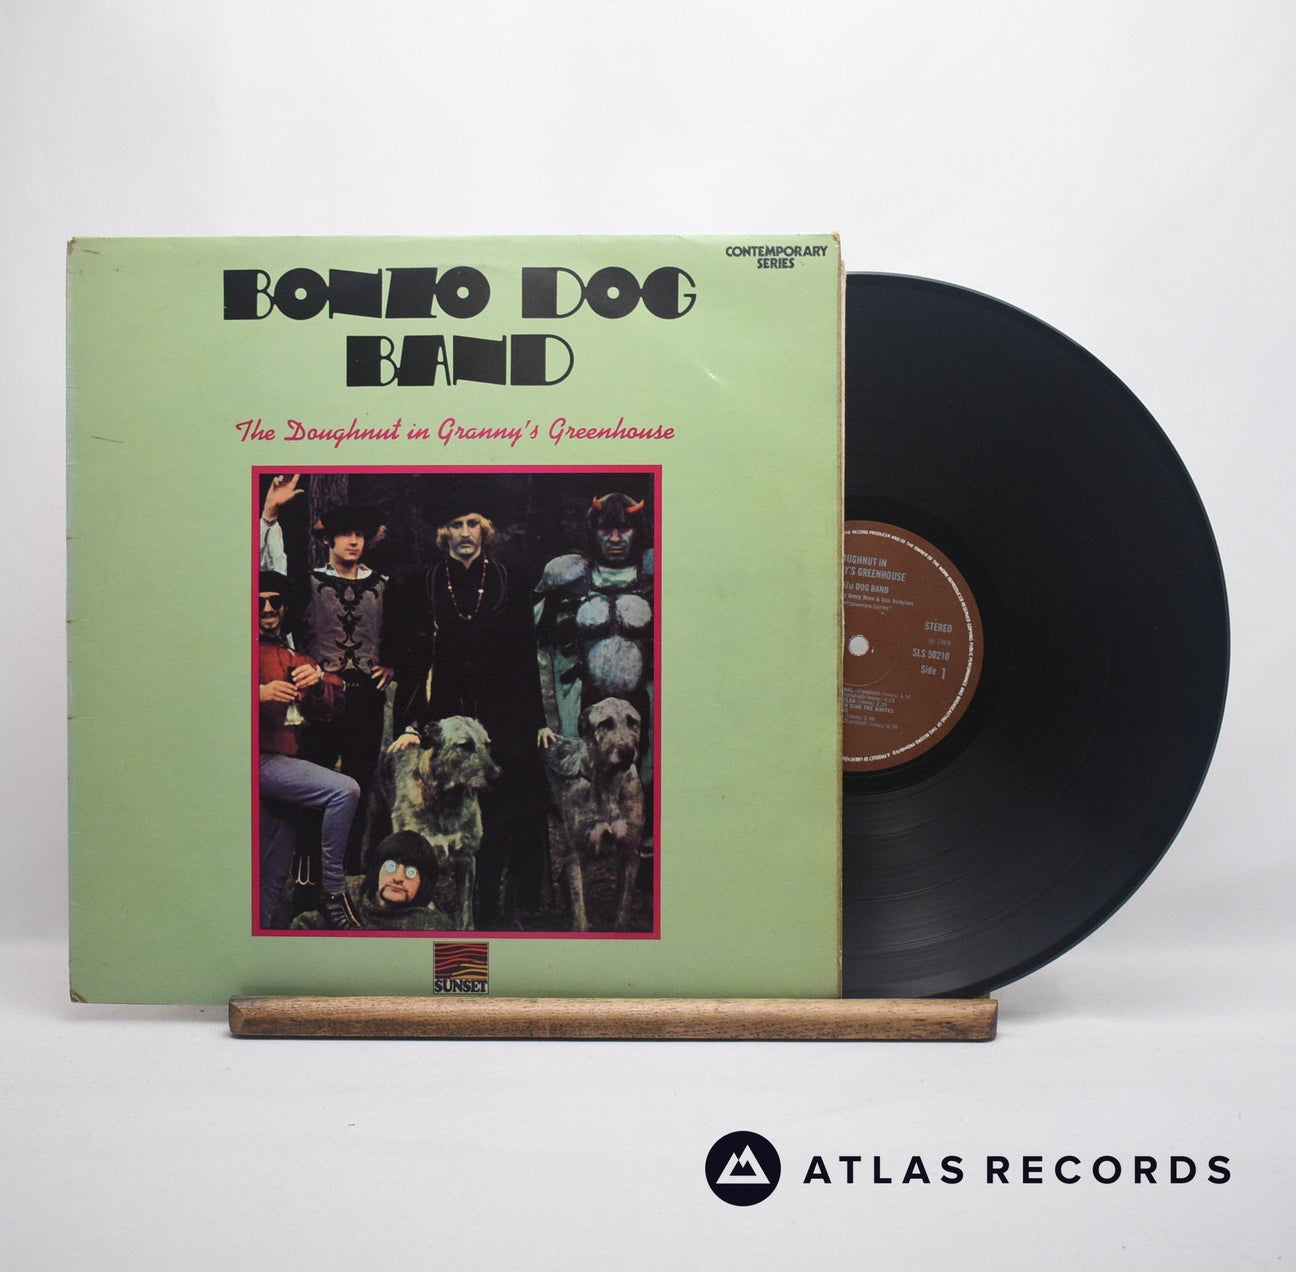 Bonzo Dog Doo-Dah Band The Doughnut In Granny's Greenhouse LP Vinyl Record - Front Cover & Record